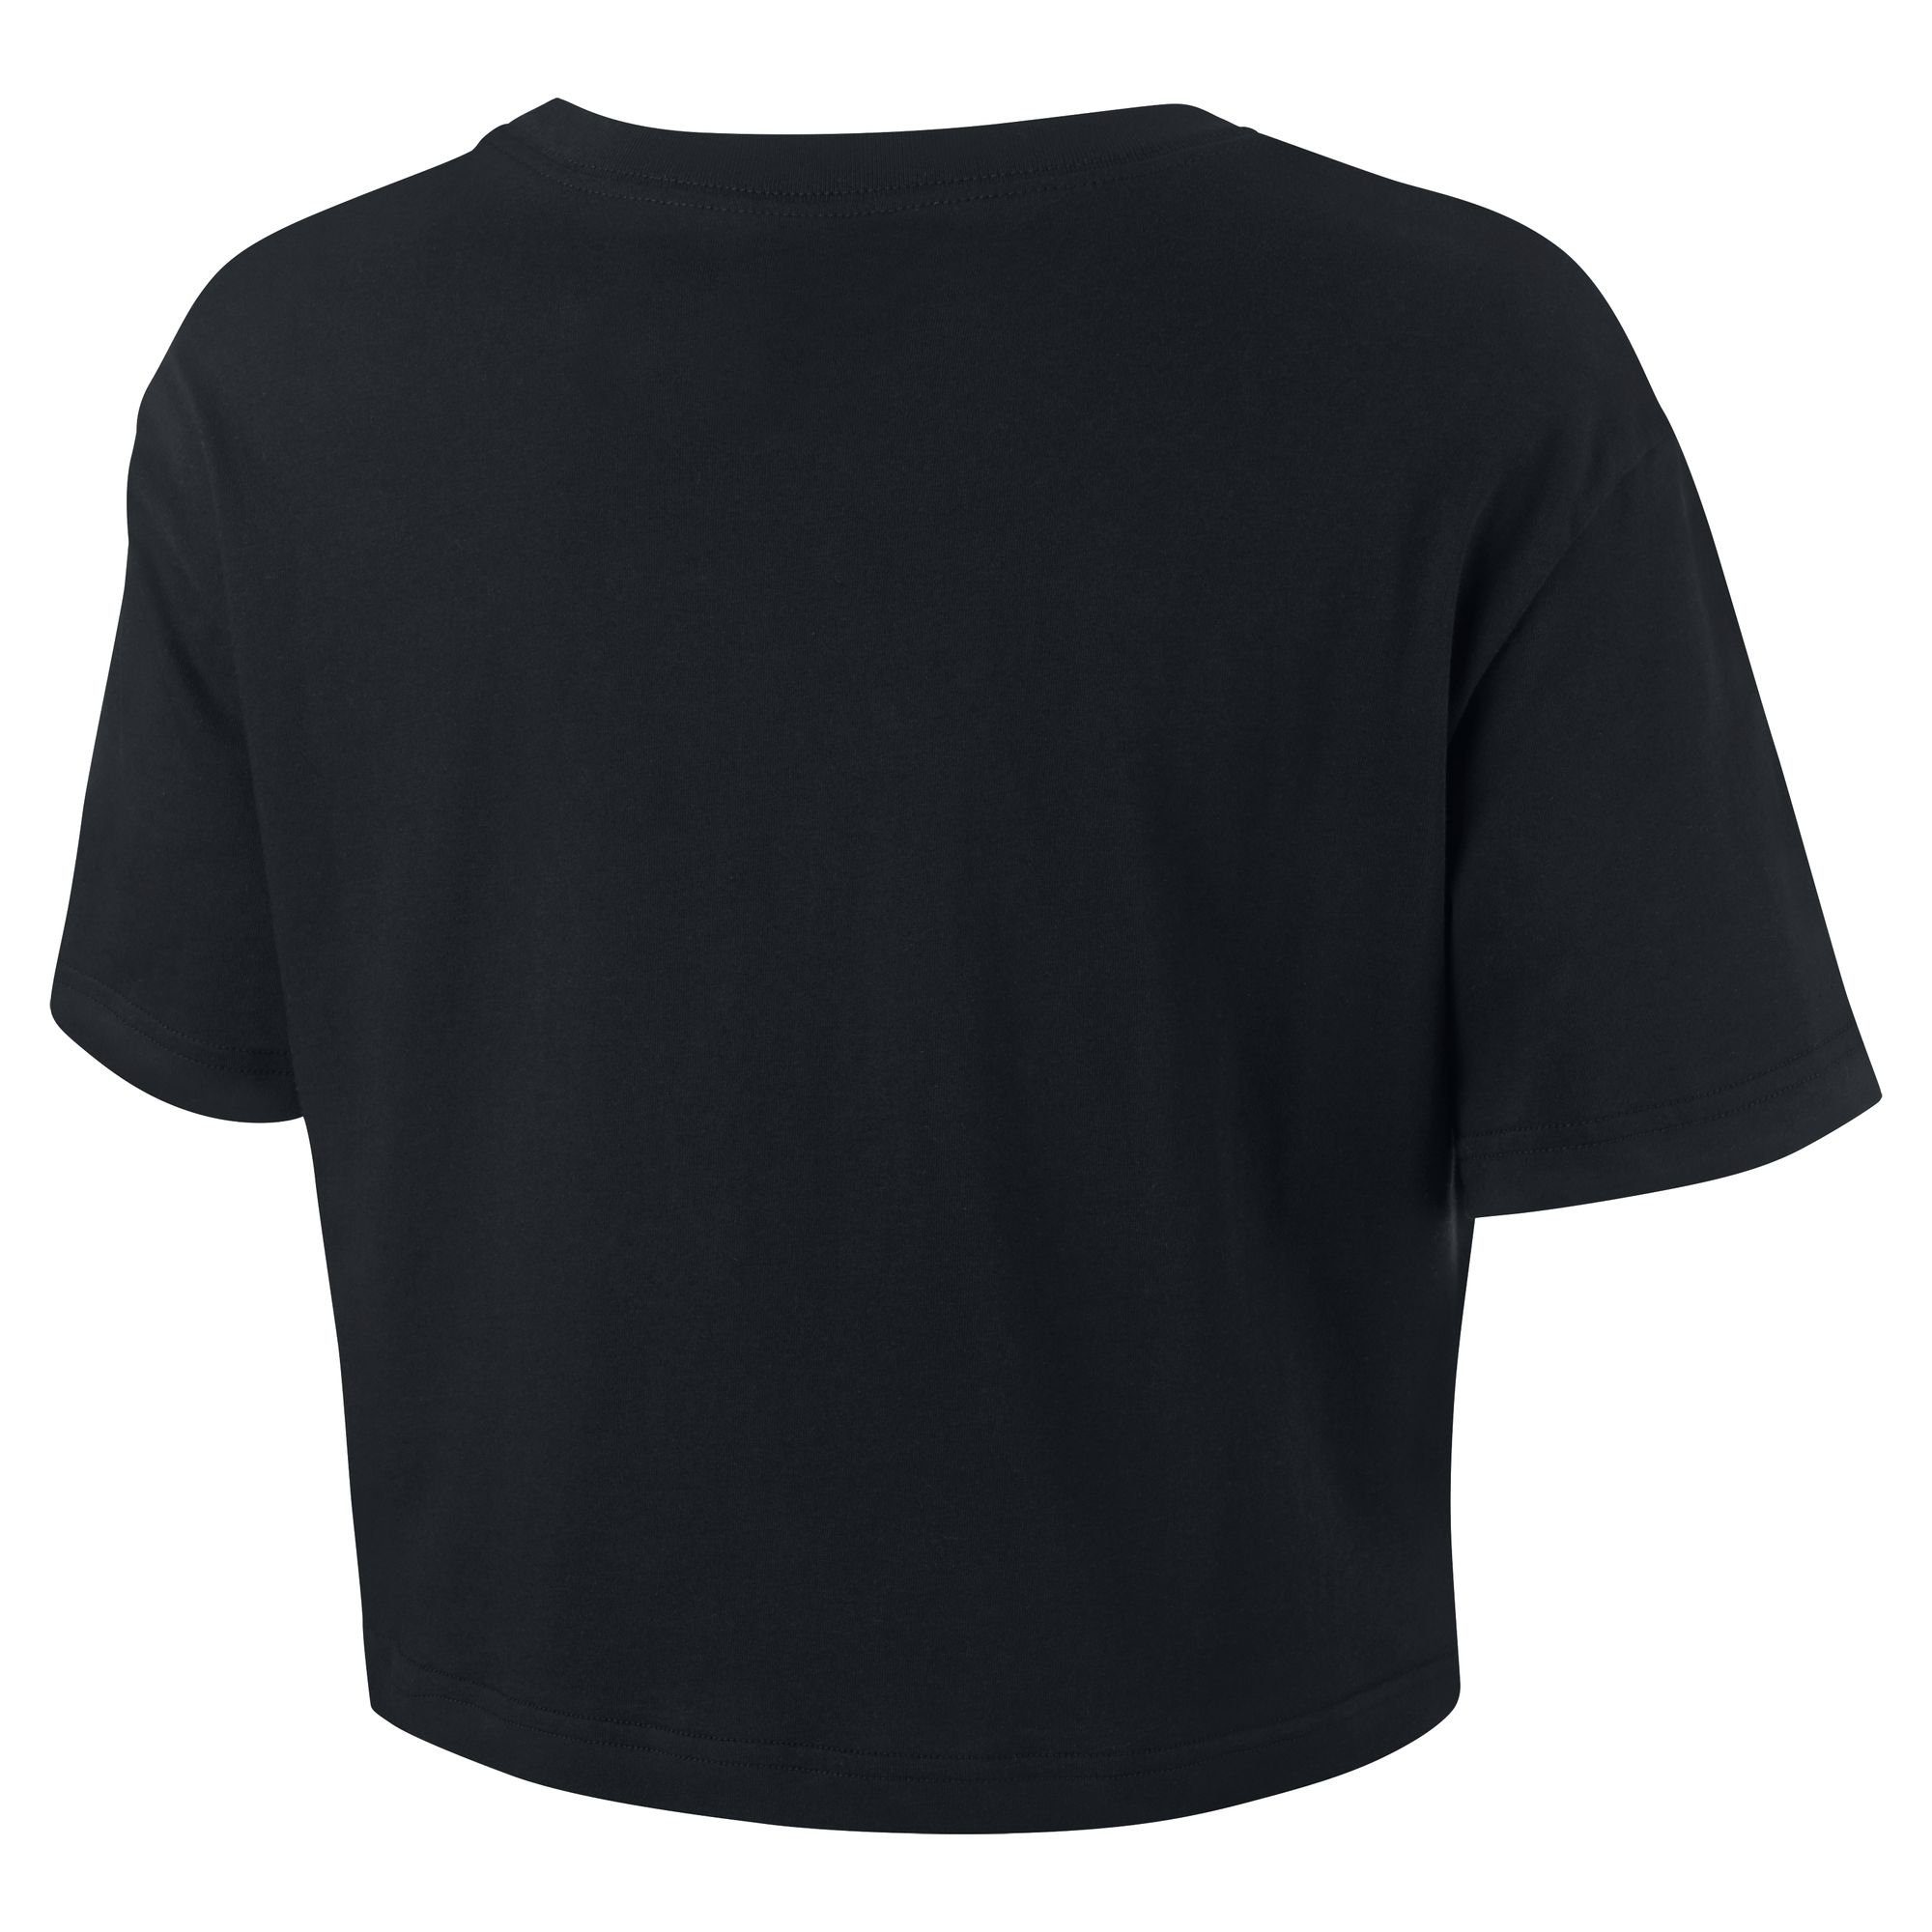 Nike Sportswear T-Shirt ESSENTIAL WOMEN'S schwarzweiss LOGO CROPPED T-SHIRT